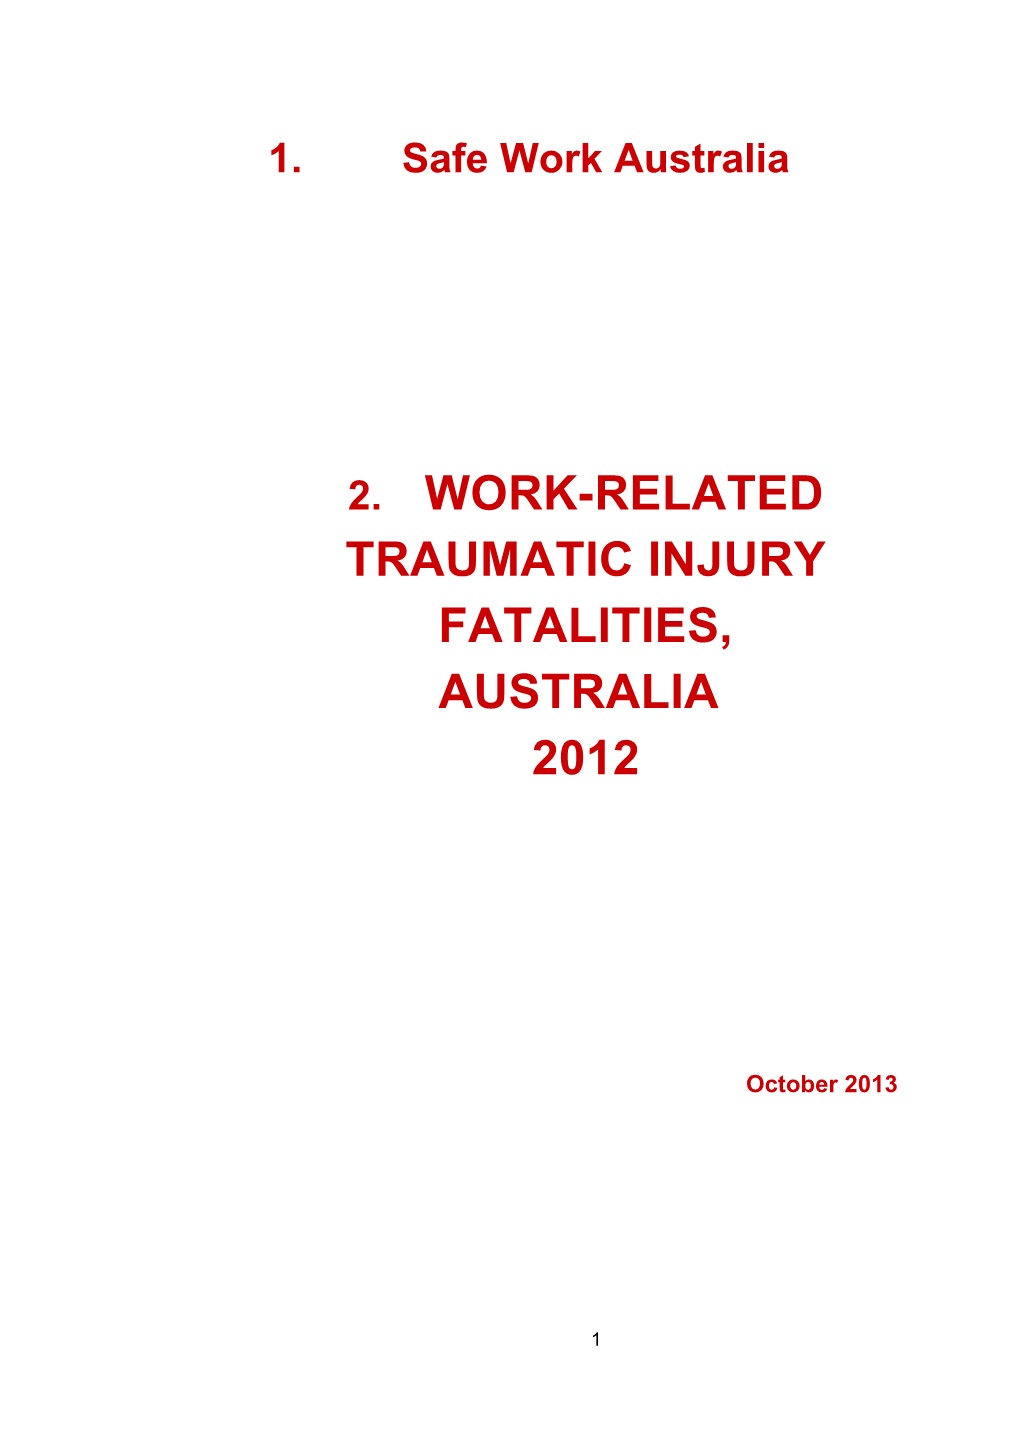 Work-Related Traumatic Injury Fatalities Australia 2012